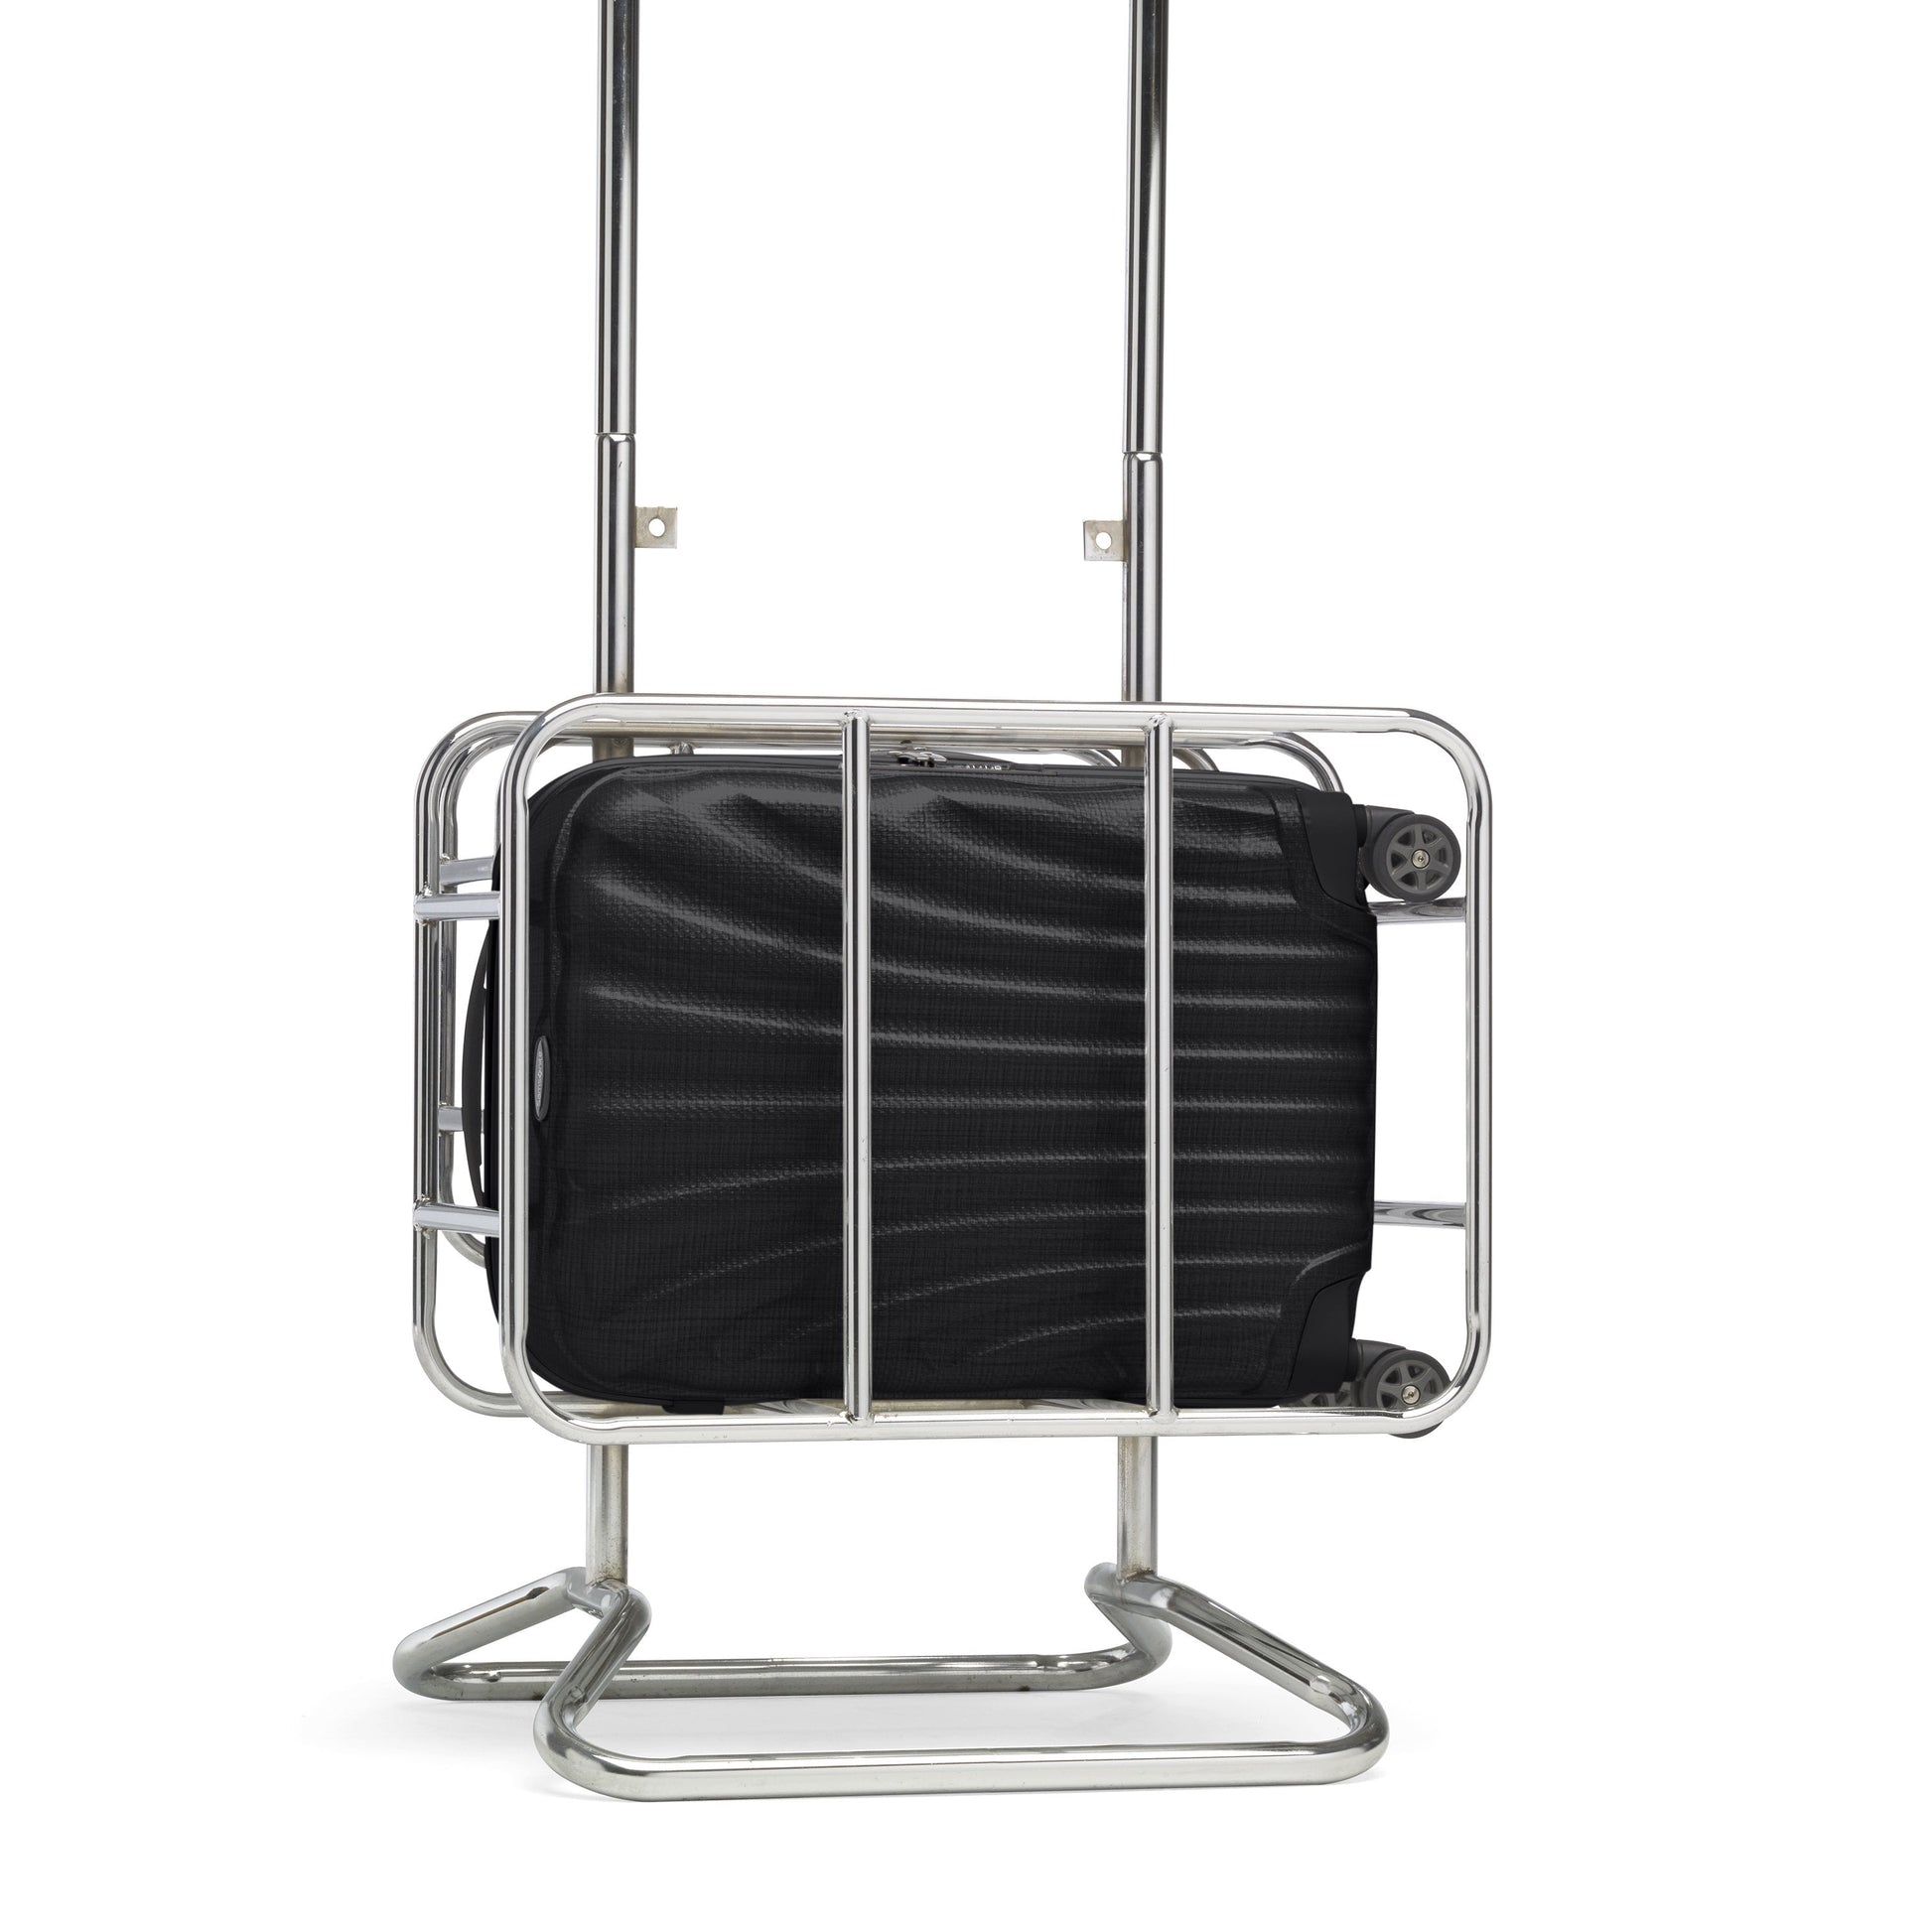 Samsonite Black Label C-Lite 3 Piece Spinner Luggage Set